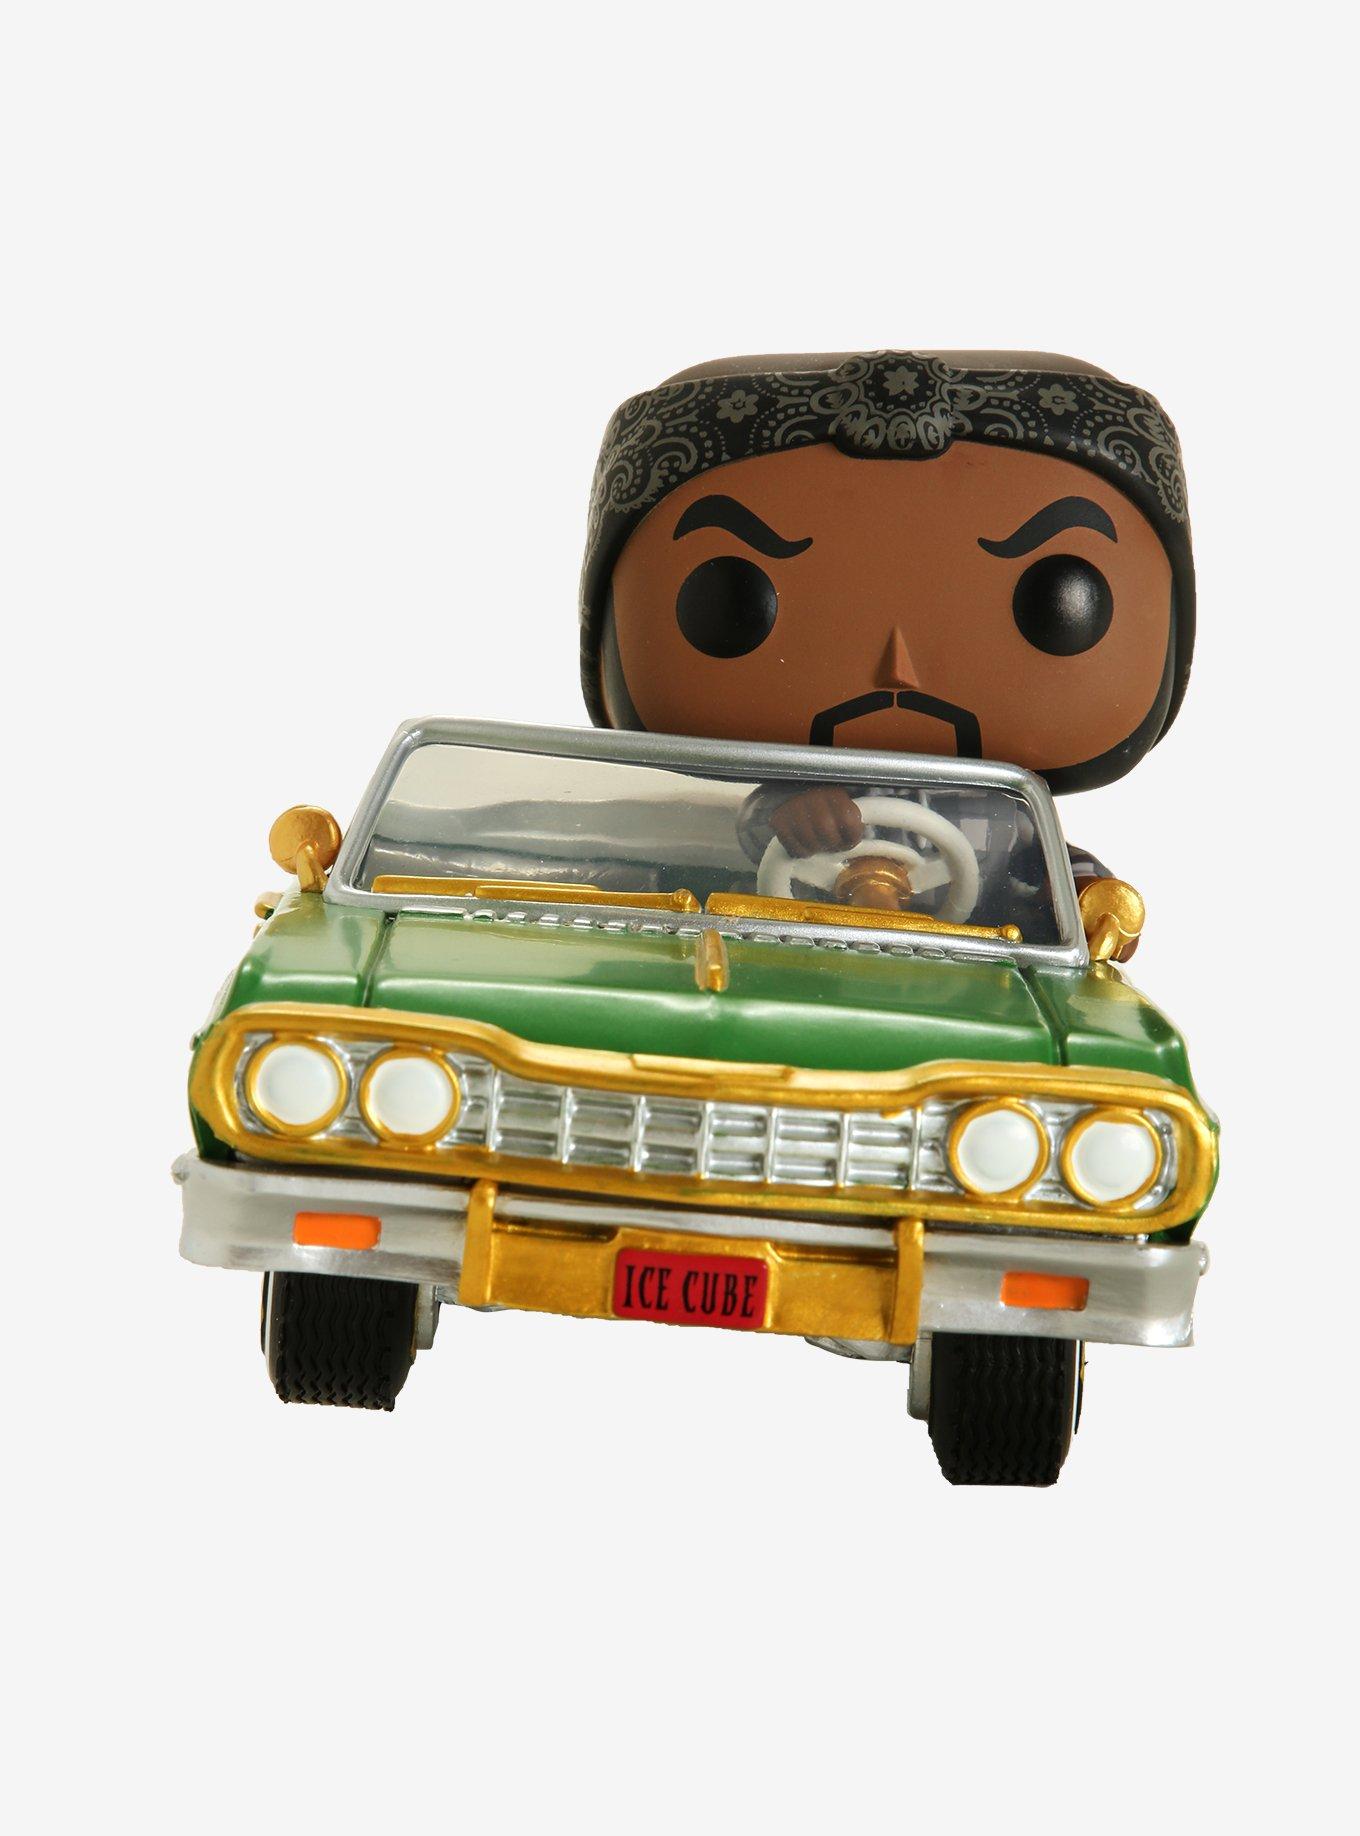 Funko Pop! Rides Ice Cube with Impala Vinyl Figure, , alternate